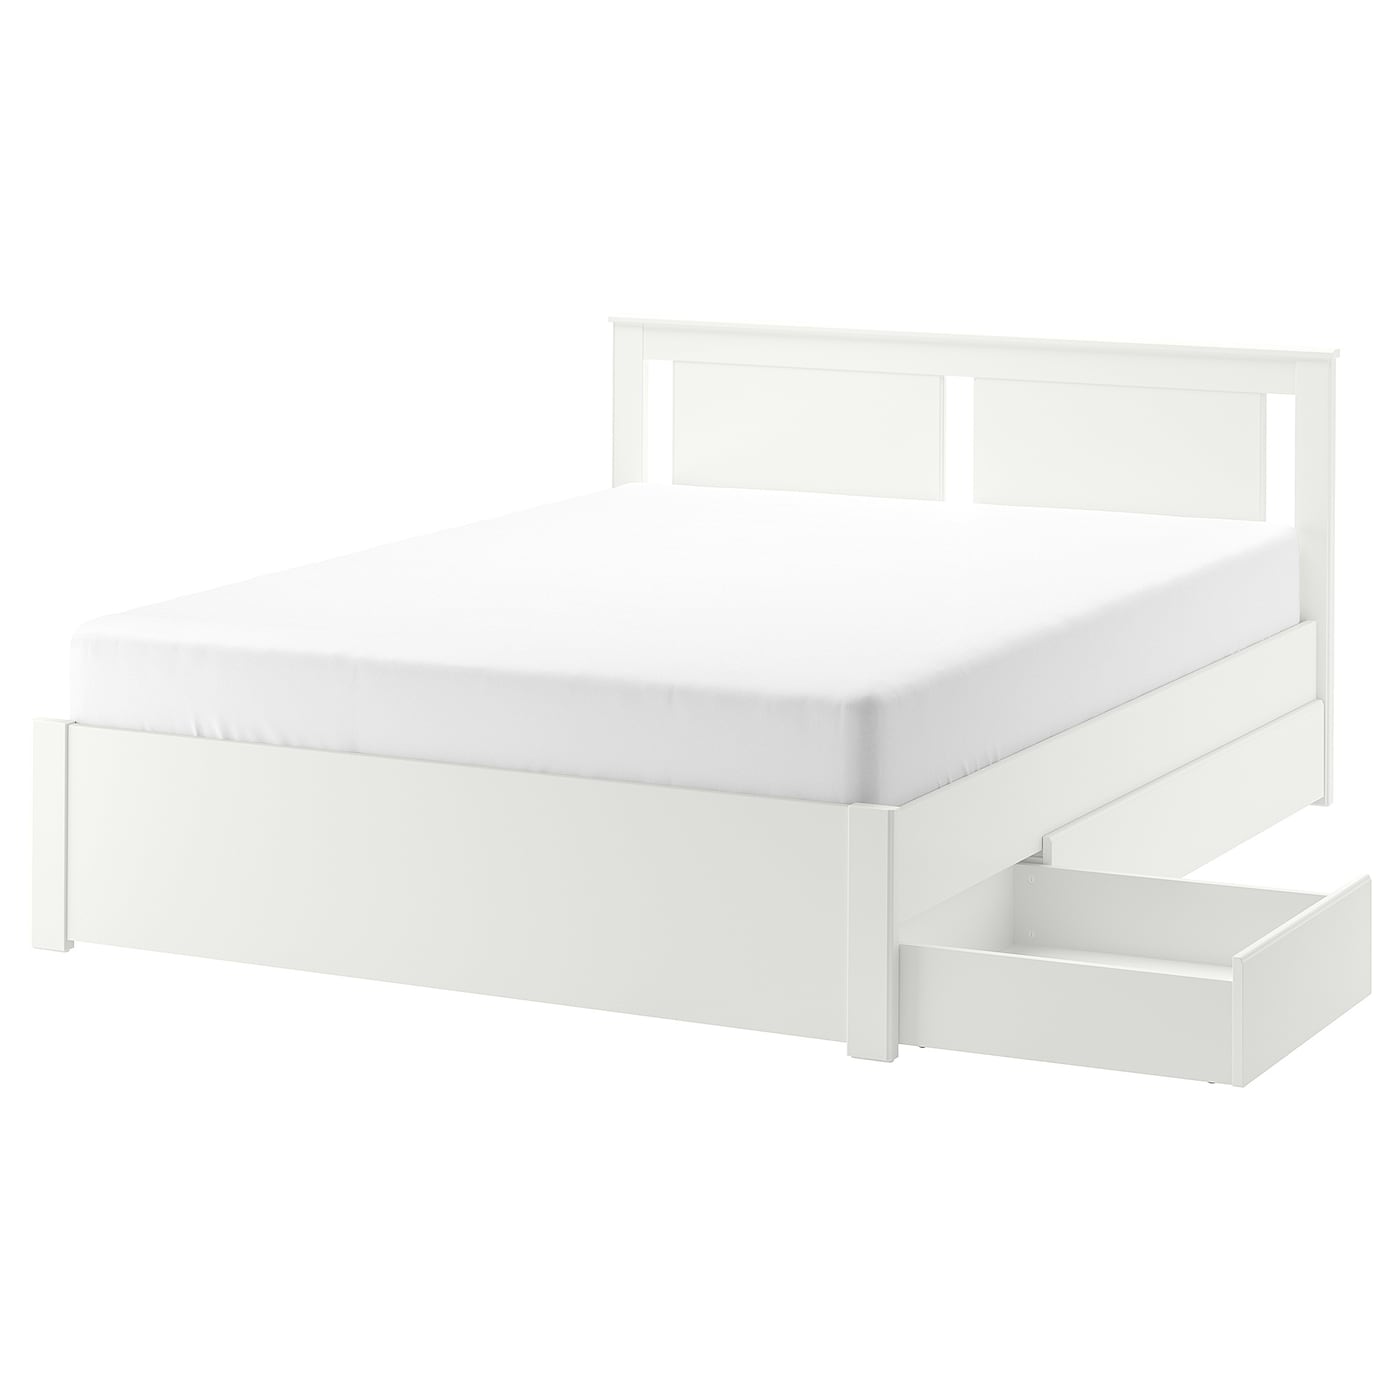 Каркас кровати с 4 ящиками для хранения - IKEA SONGESAND/LURÖY/LUROY, 200х140 см, белый, СОНГЕСАНД/ЛУРОЙ ИКЕА